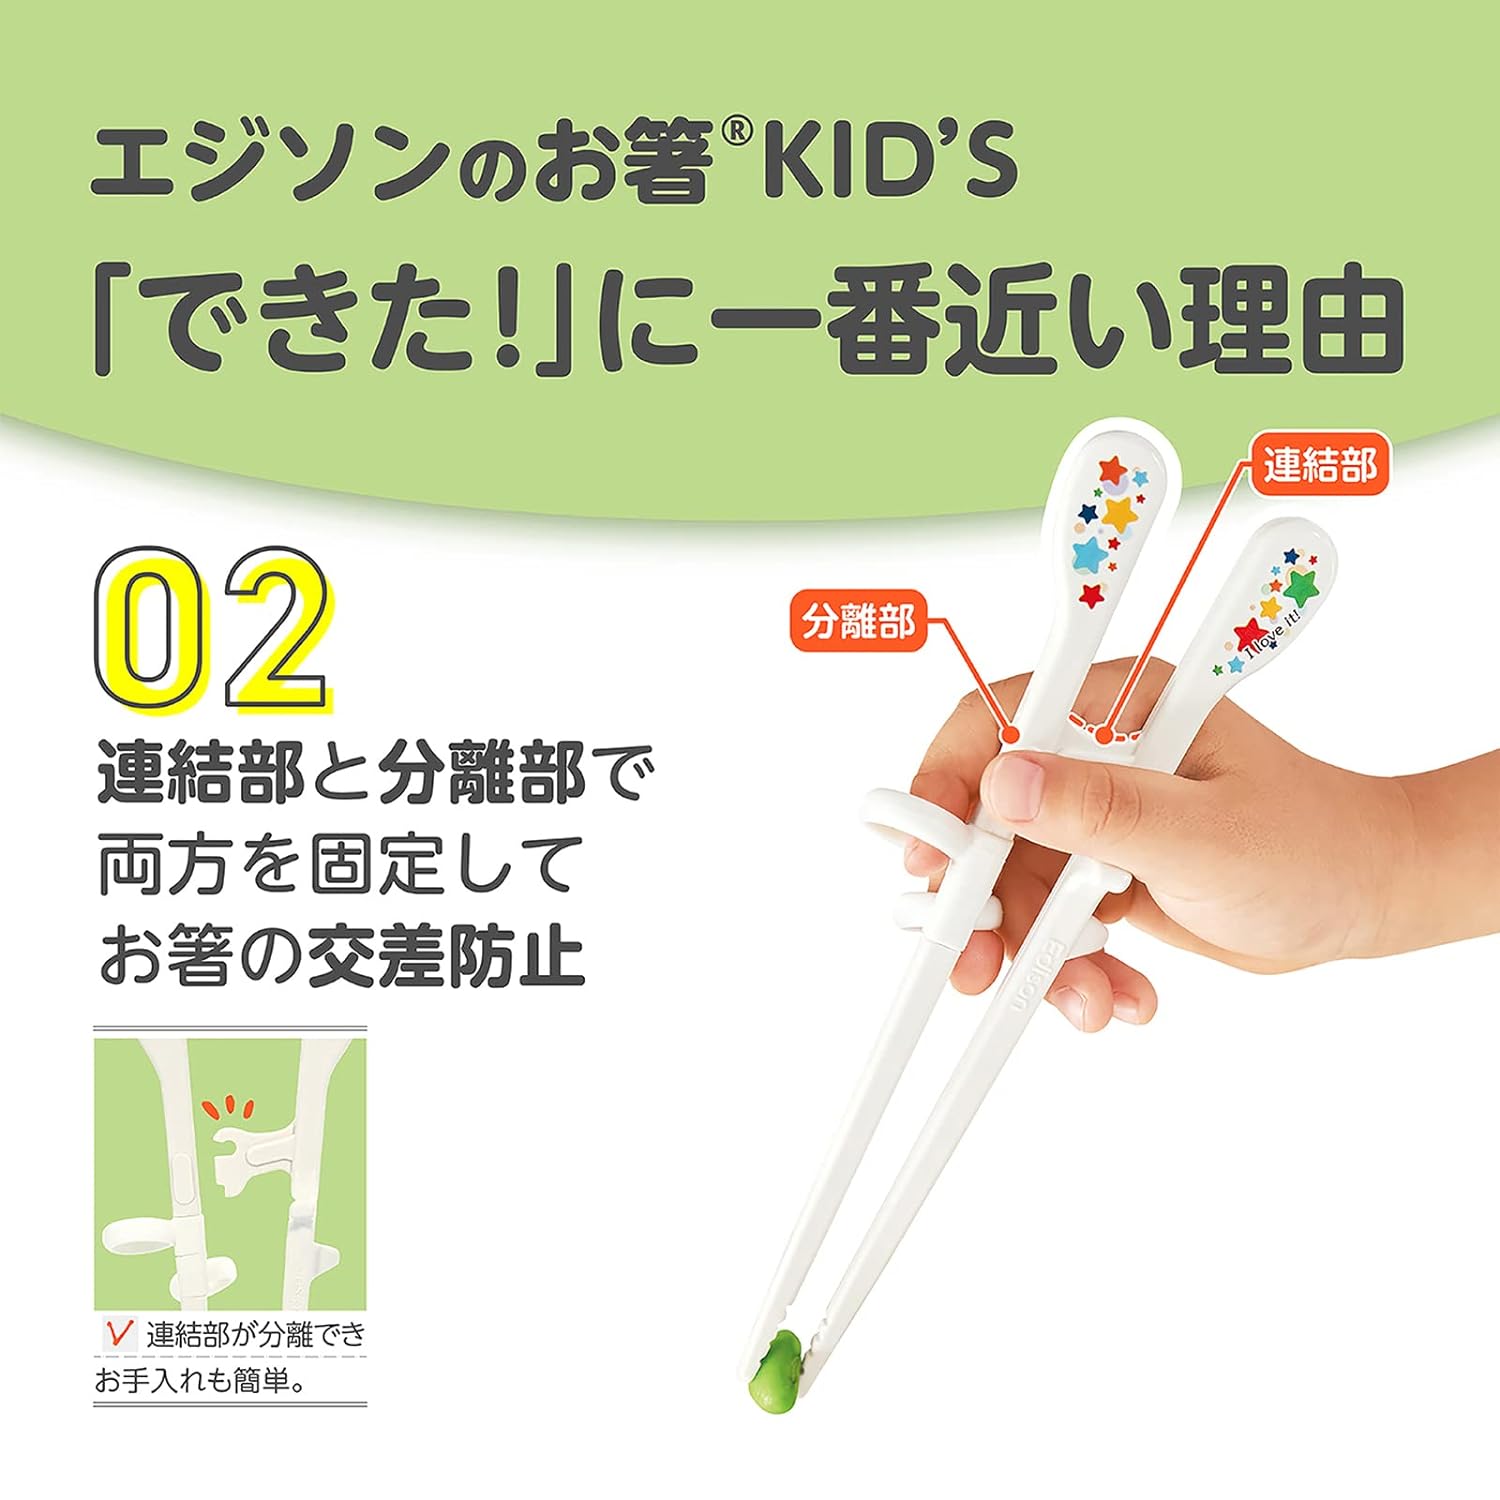 Edison mama Chopsticks Kid's Series Lower Grades 6.9 inches (17.5 cm) Left Hand White